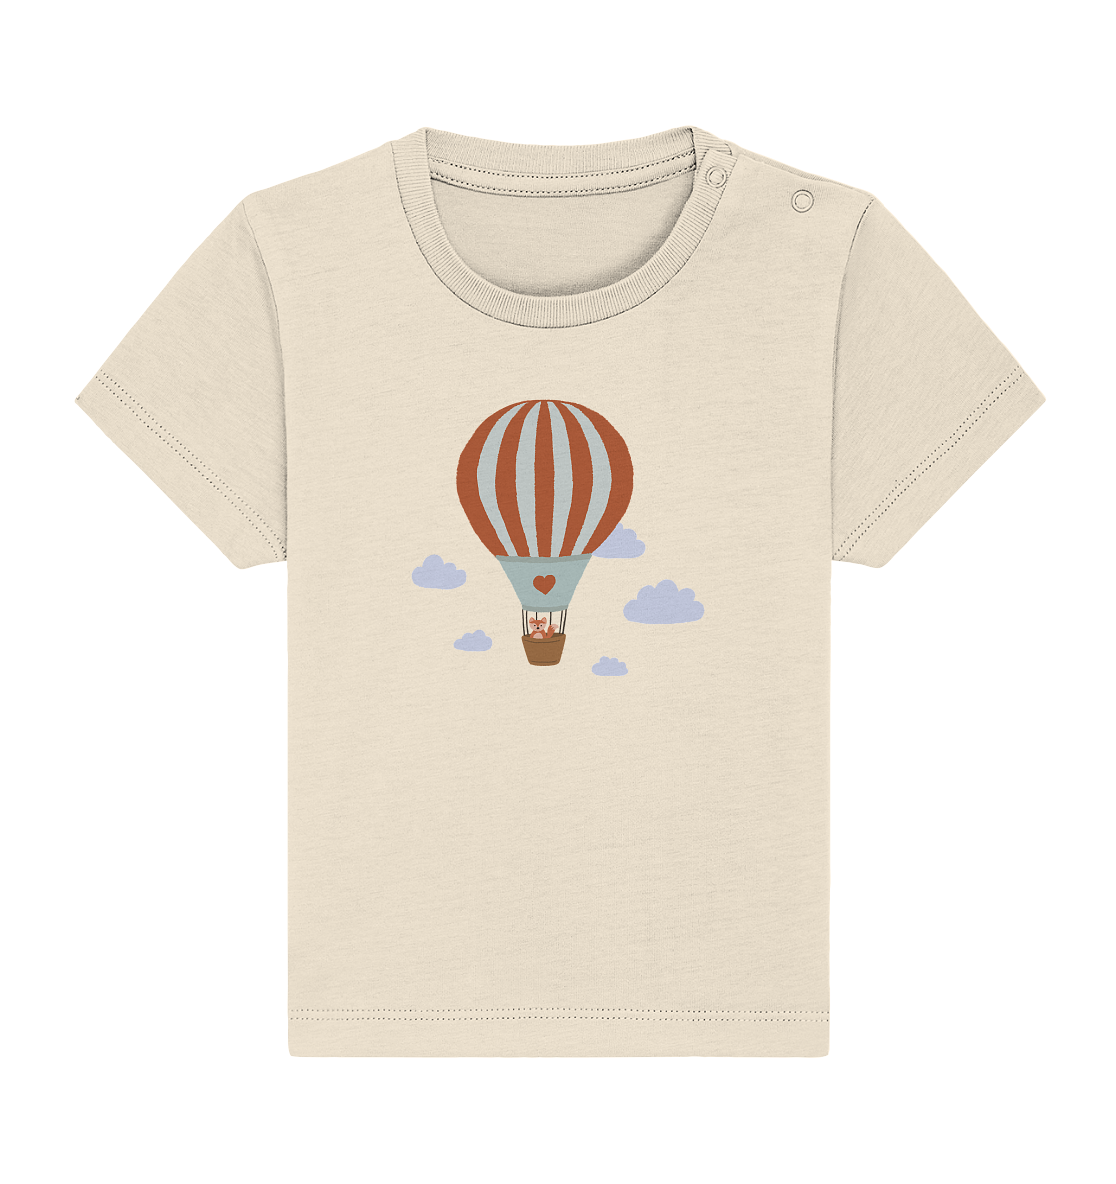 Baby Shirt "Heißluftballon"